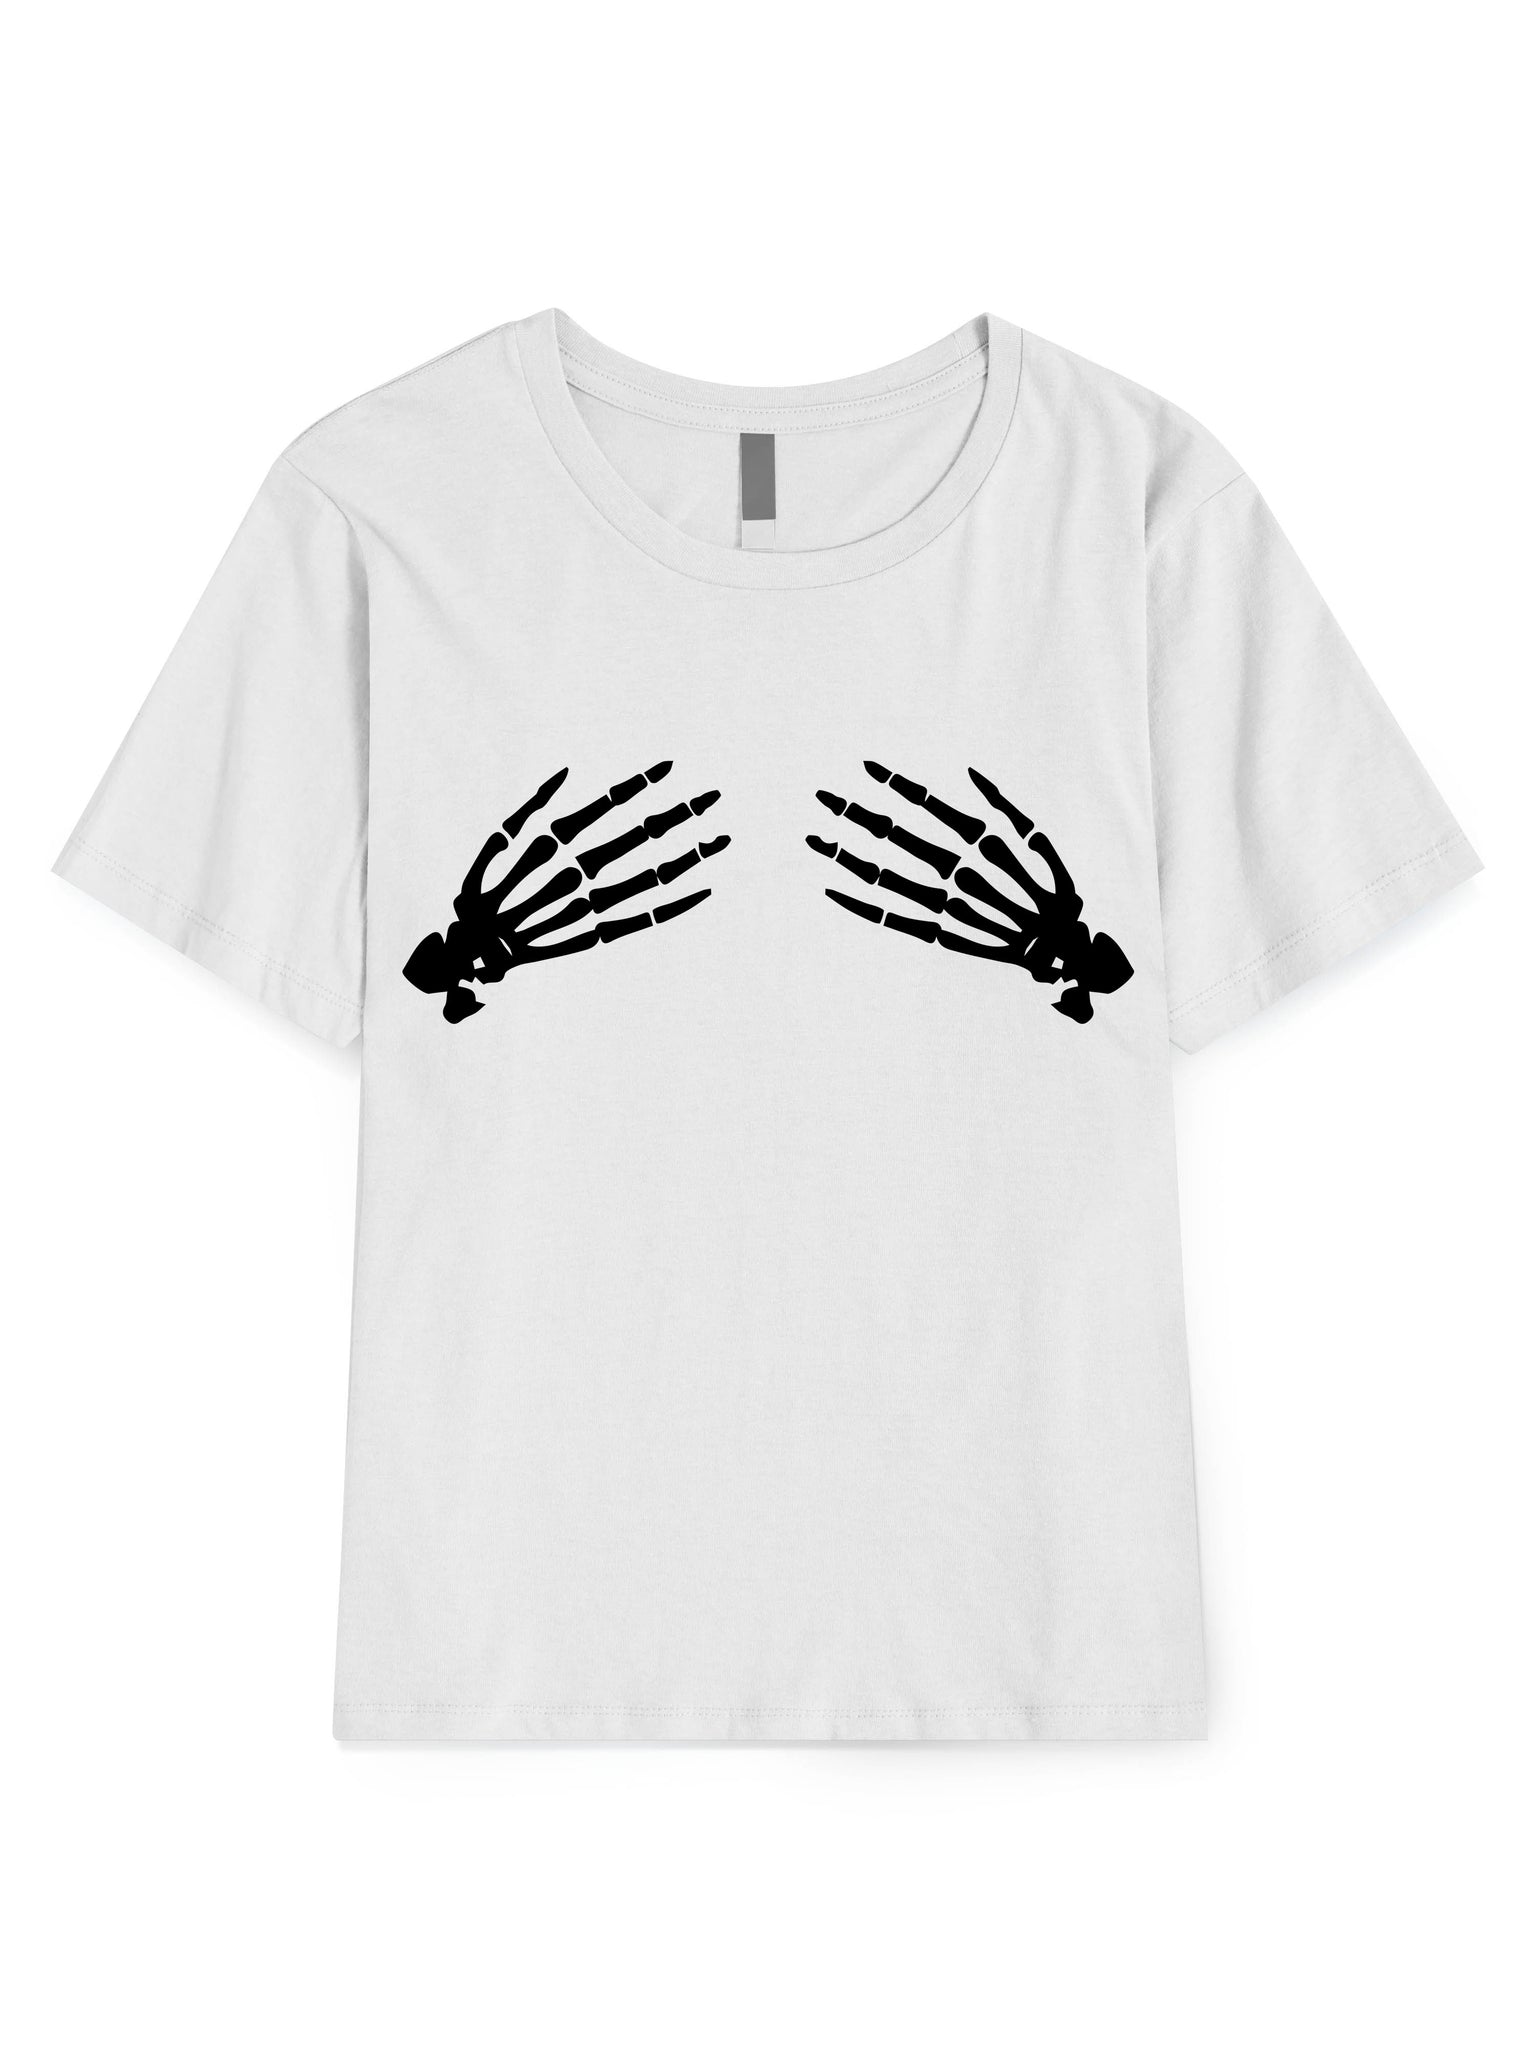 Skeleton Hand Shirt – Skeleton Hand Bra Halloween T-Shirt – Teezou Store